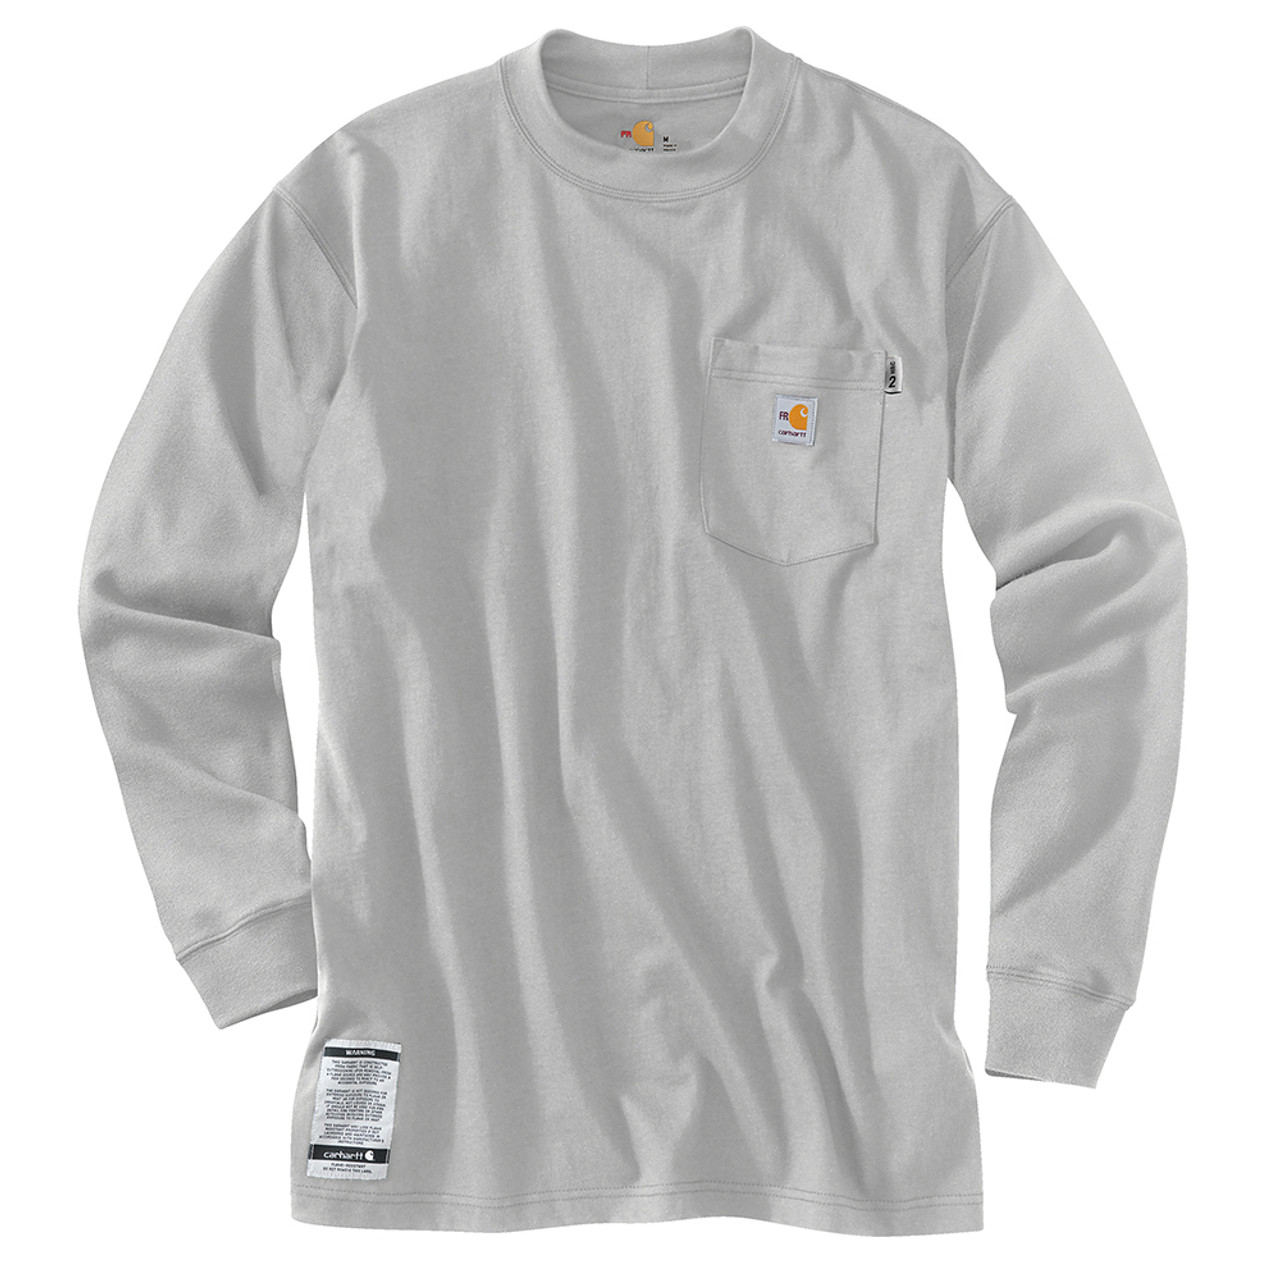 Carhartt Force Long Sleeve Pocket T-Shirt, Product